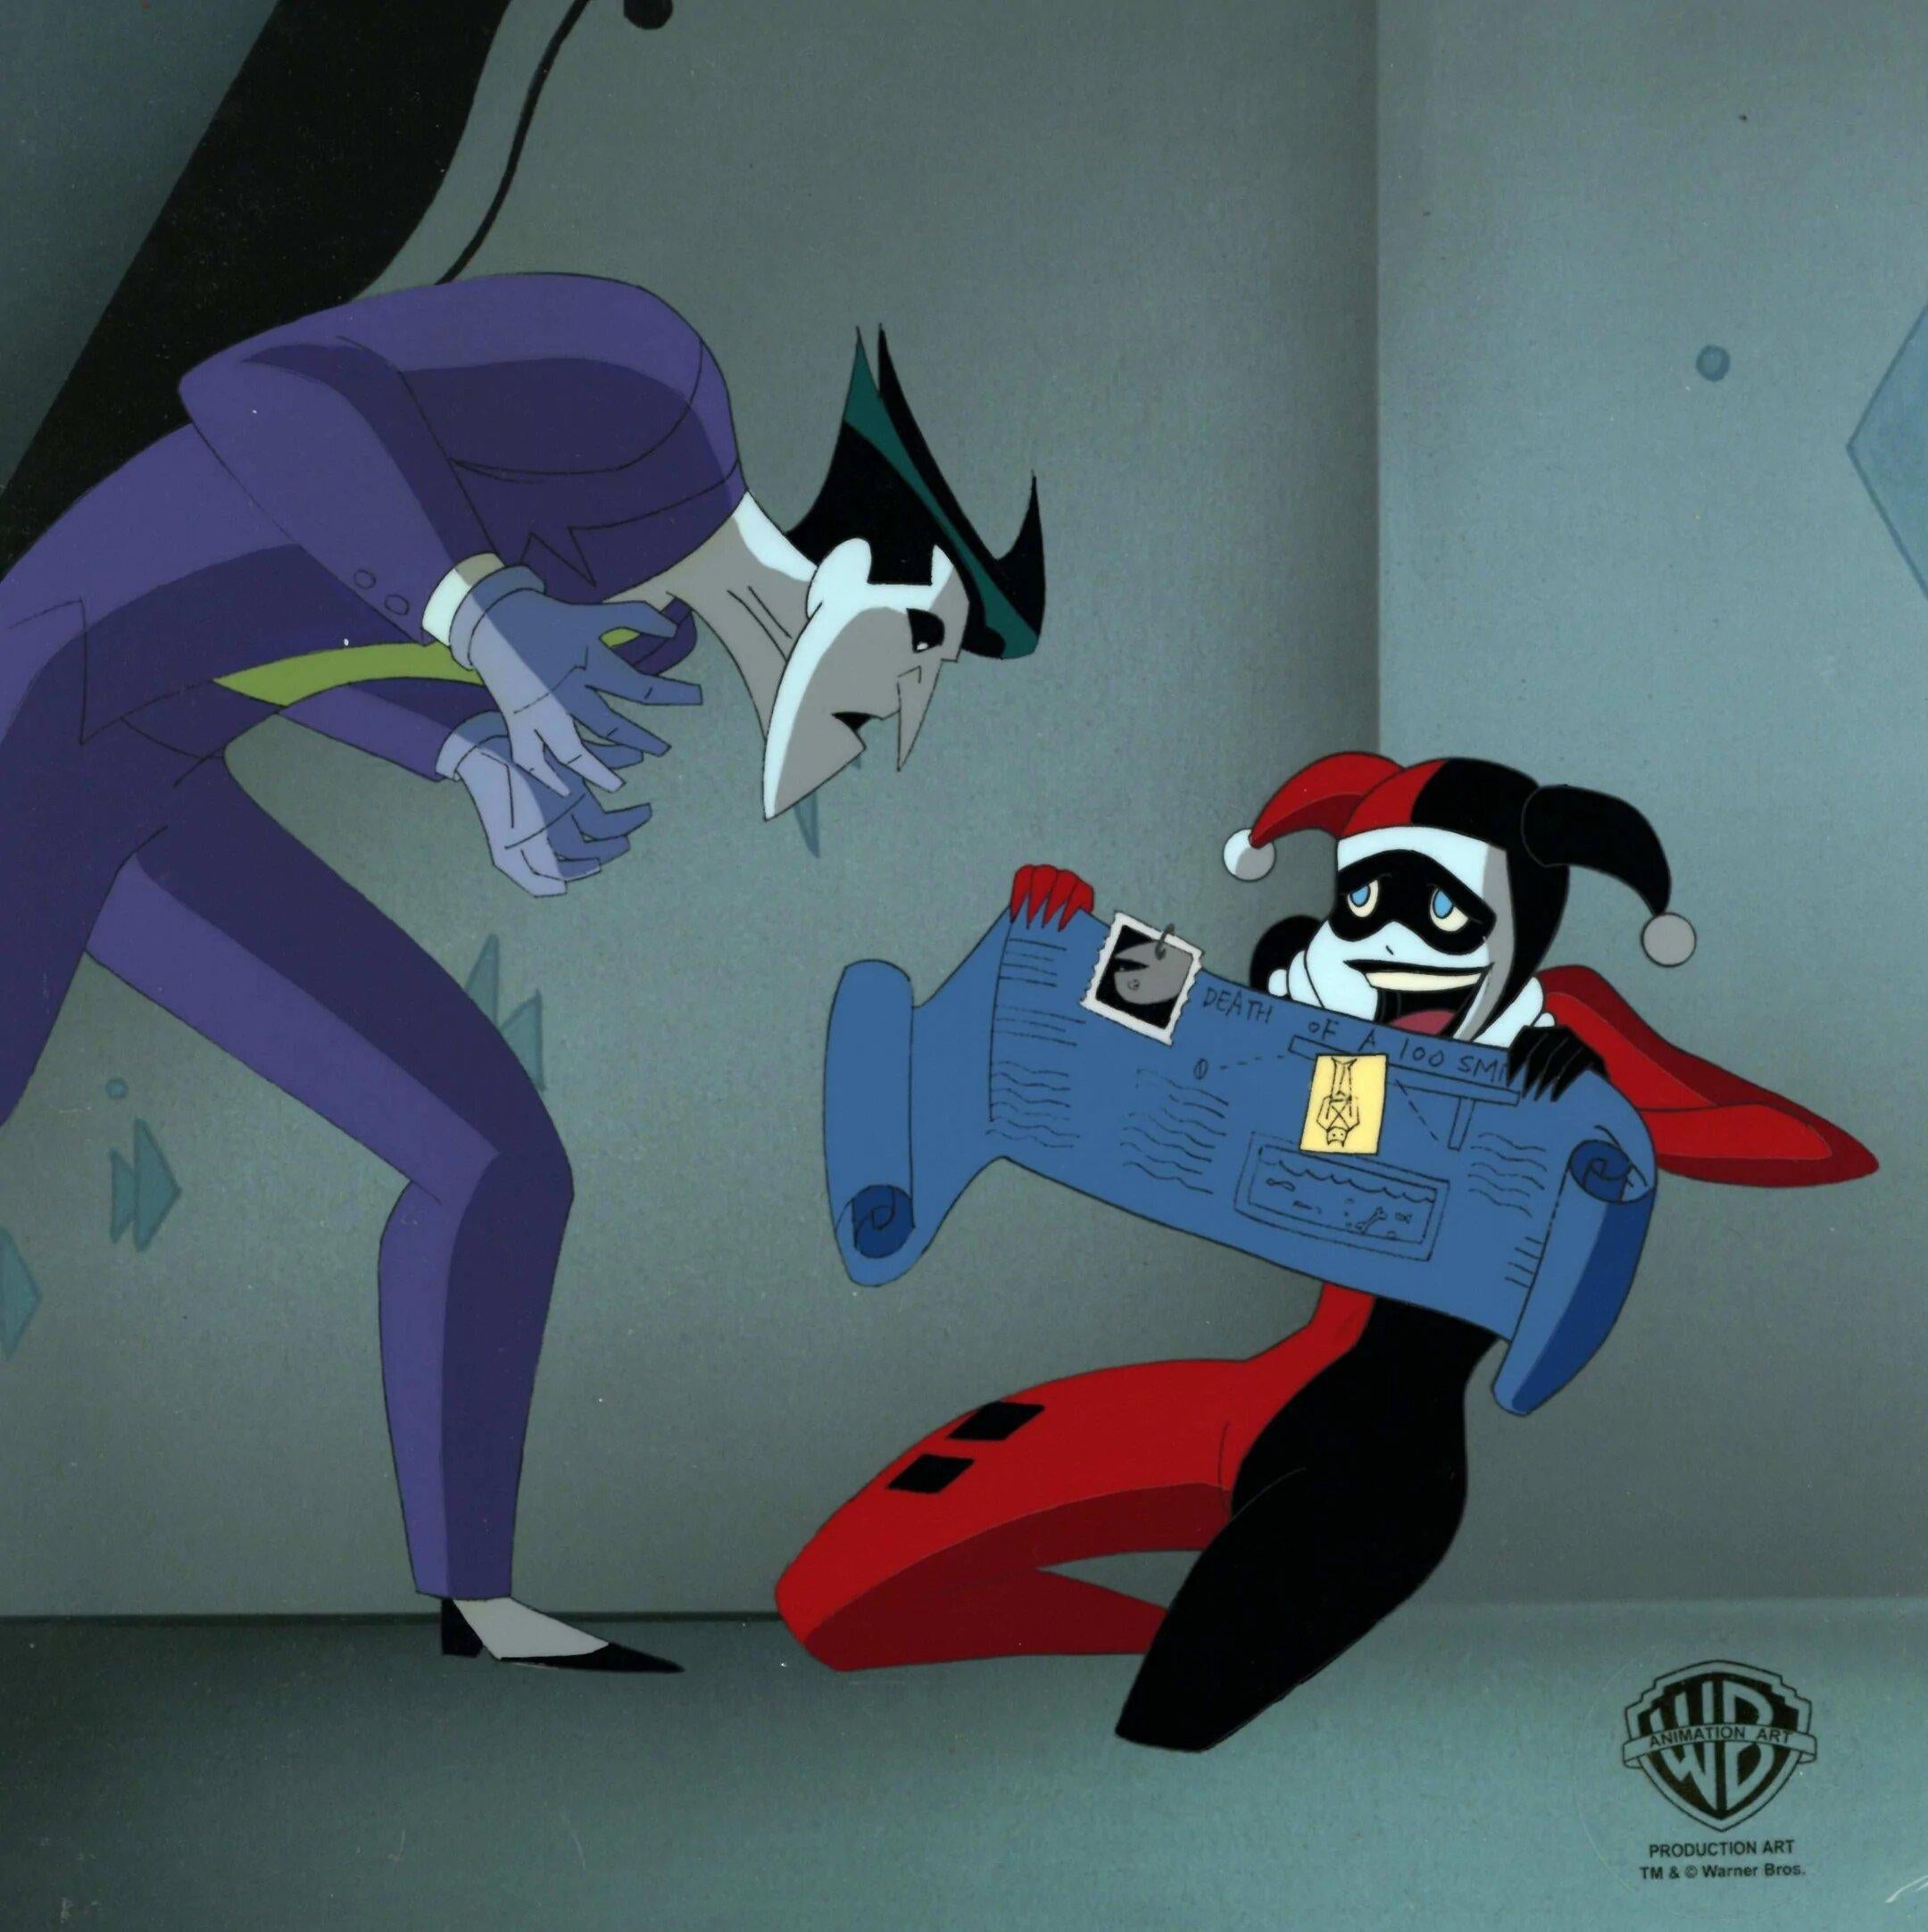 TNBA Original Production Cel With Matching Drawing: Joker, Harley Quinn - Art by DC Comics Studio Artists